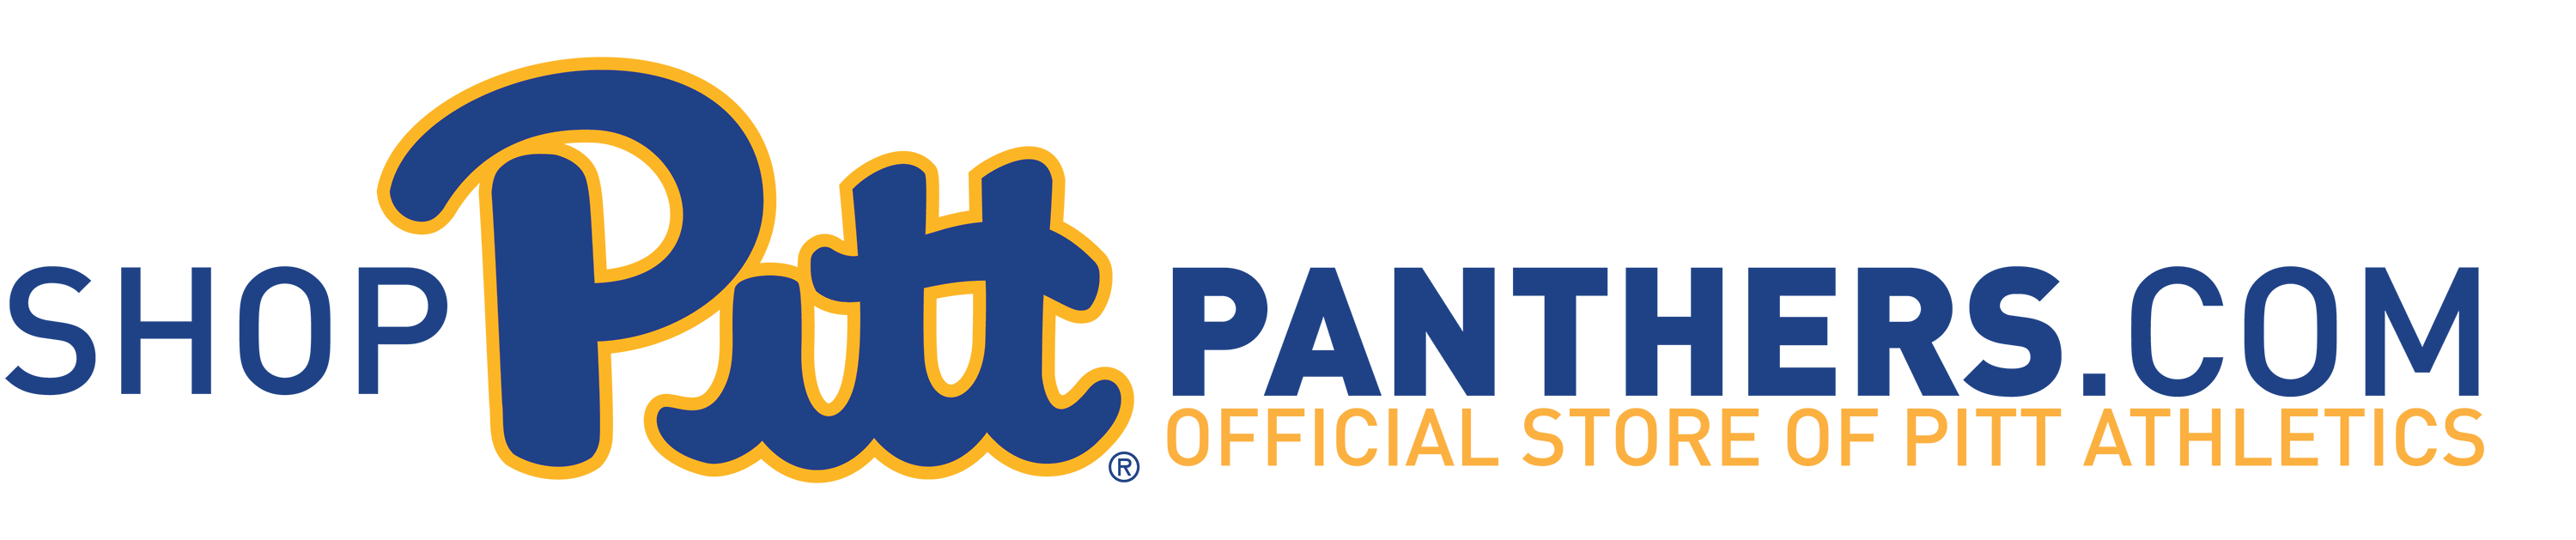 panthers shop